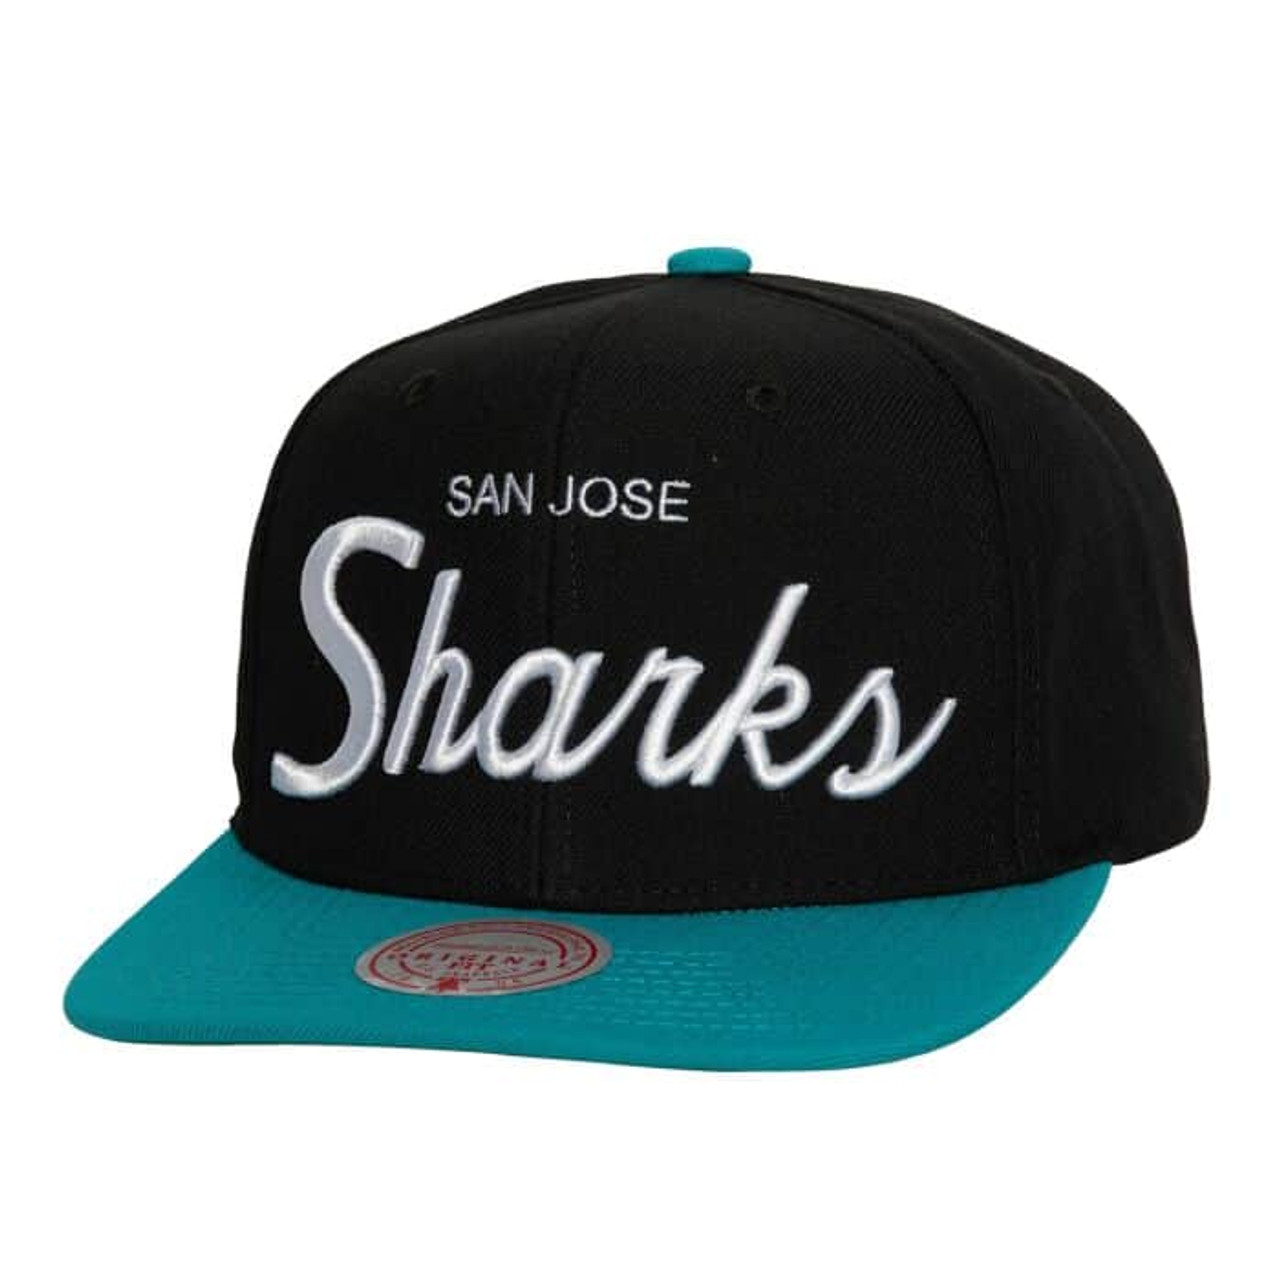 Mitchell & Ness Vintage Snapback - San Jose Sharks - Adult